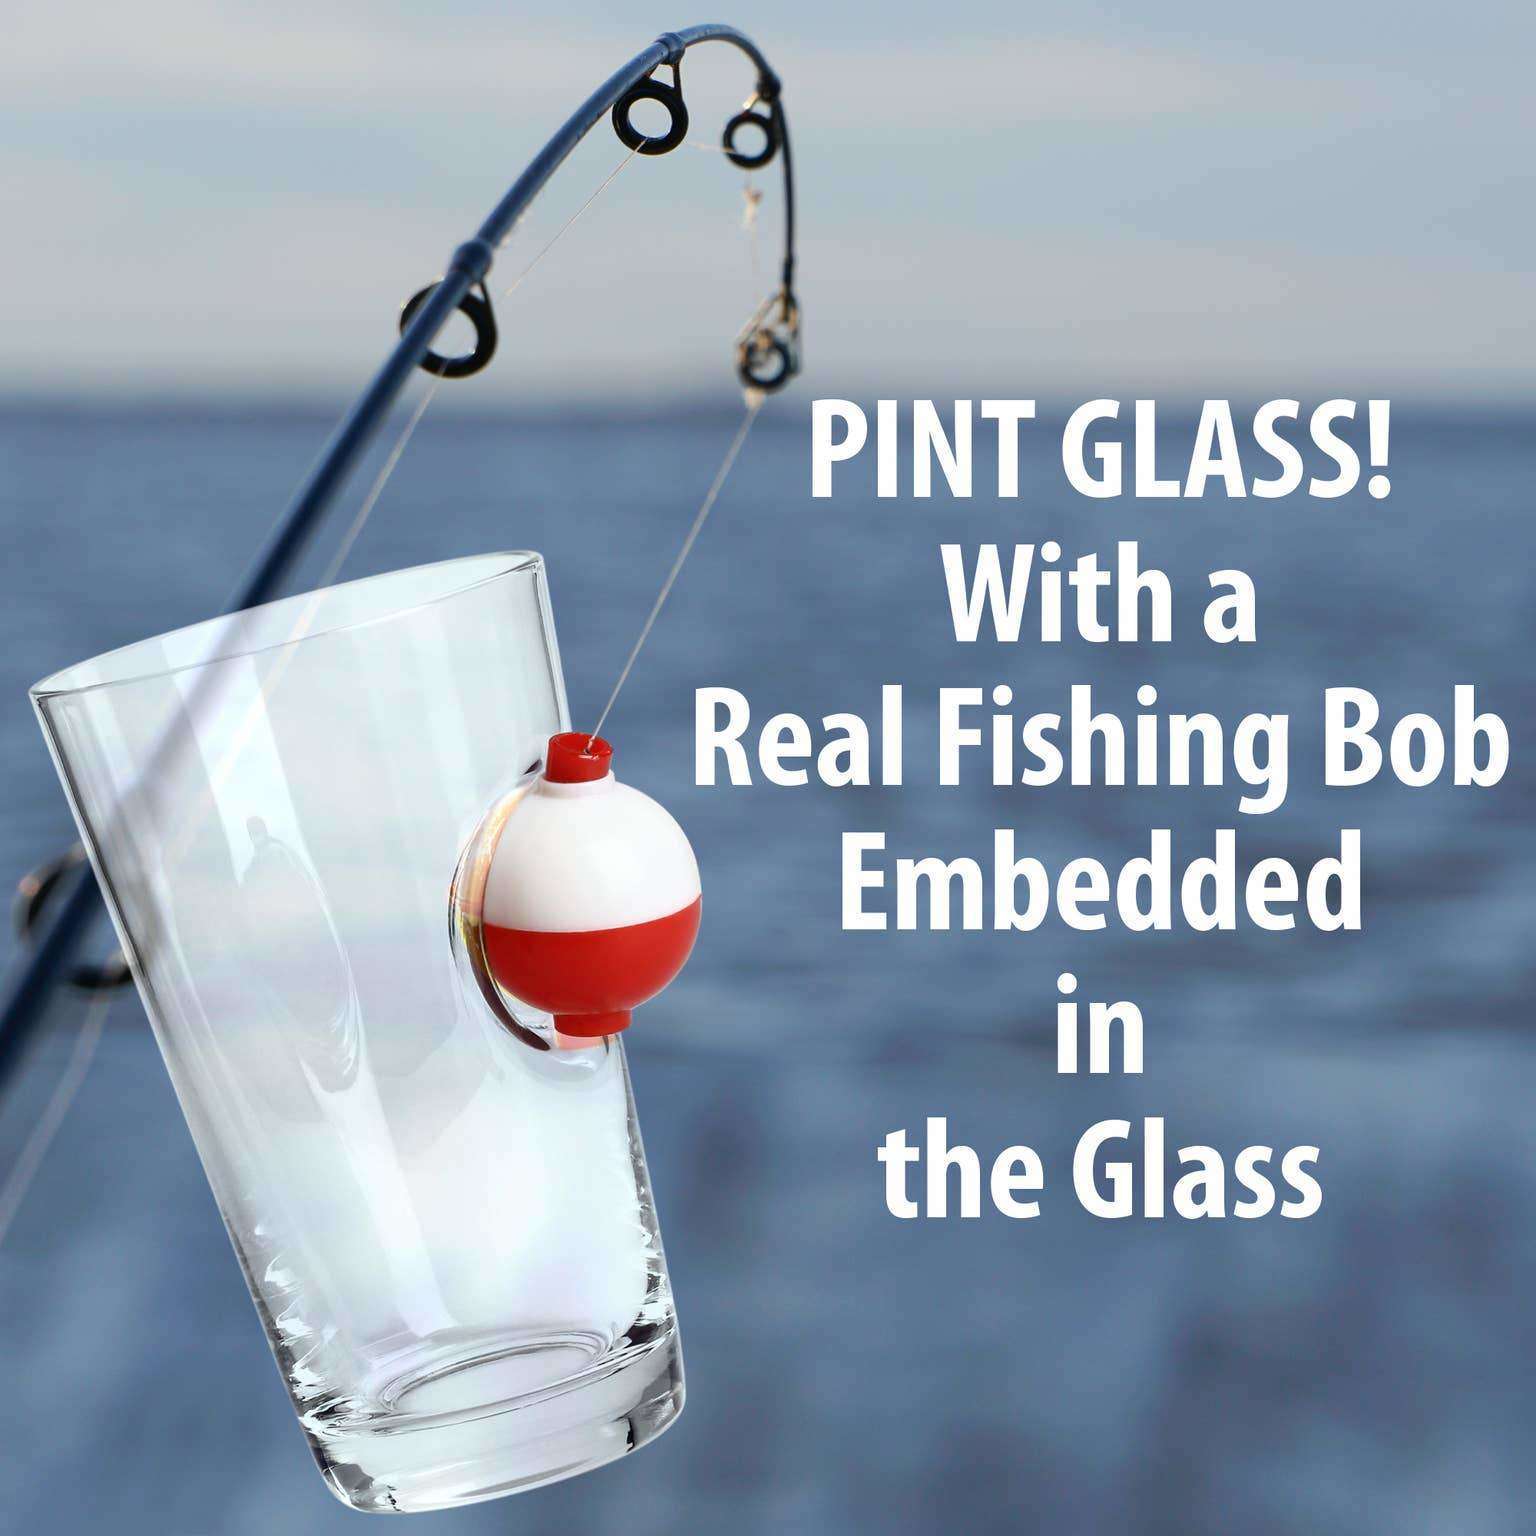 Gone Fishing Pint Glass